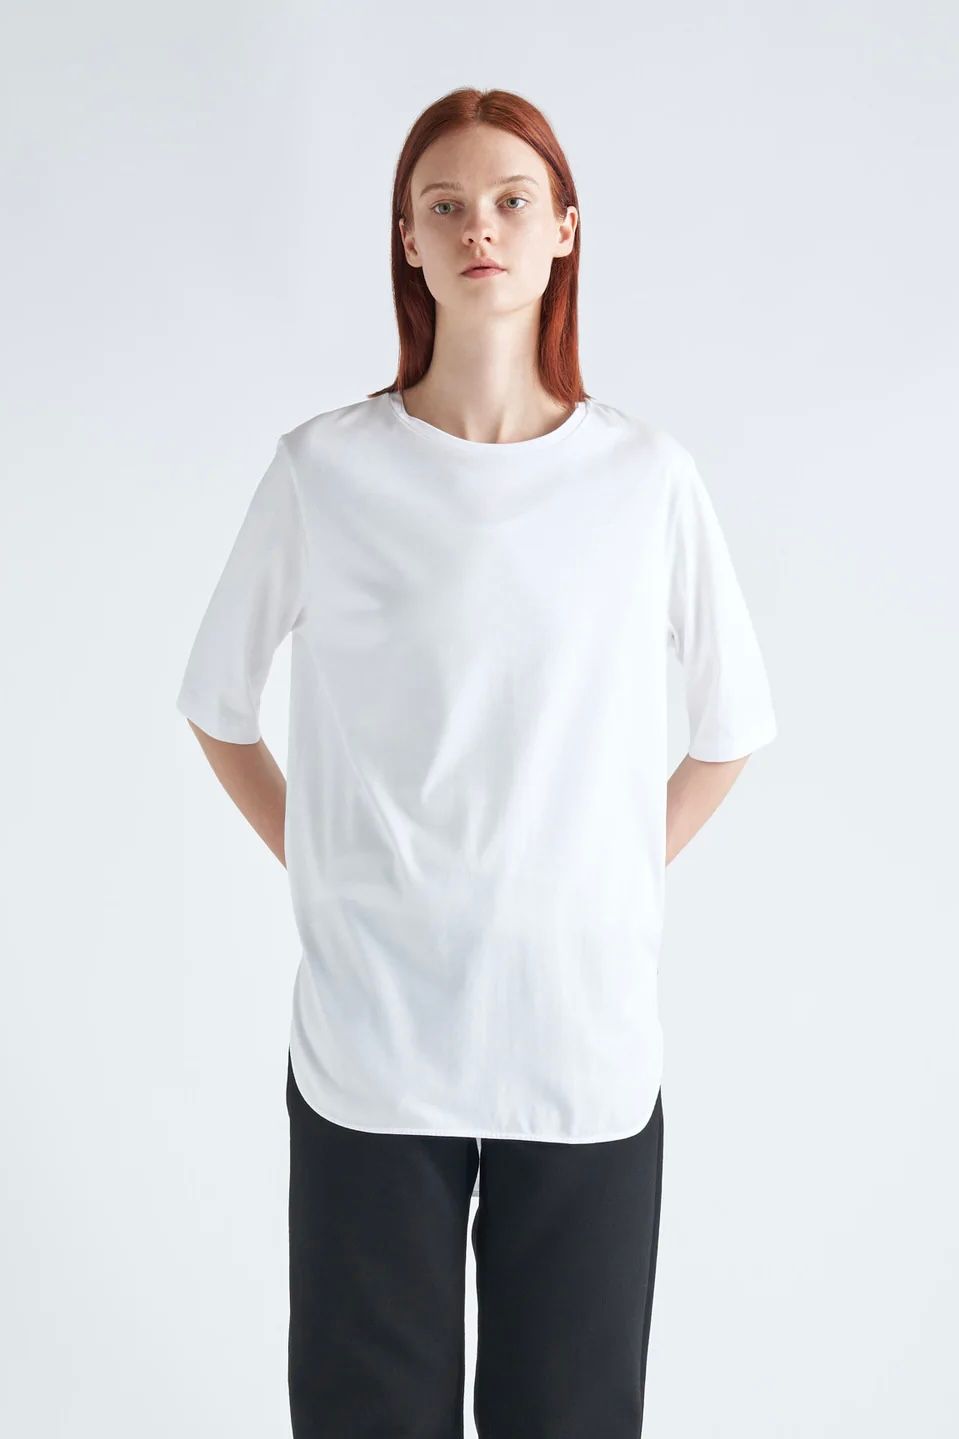 ATON - suvin60/2 round hem t-shirt -white- women 23ss | asterisk